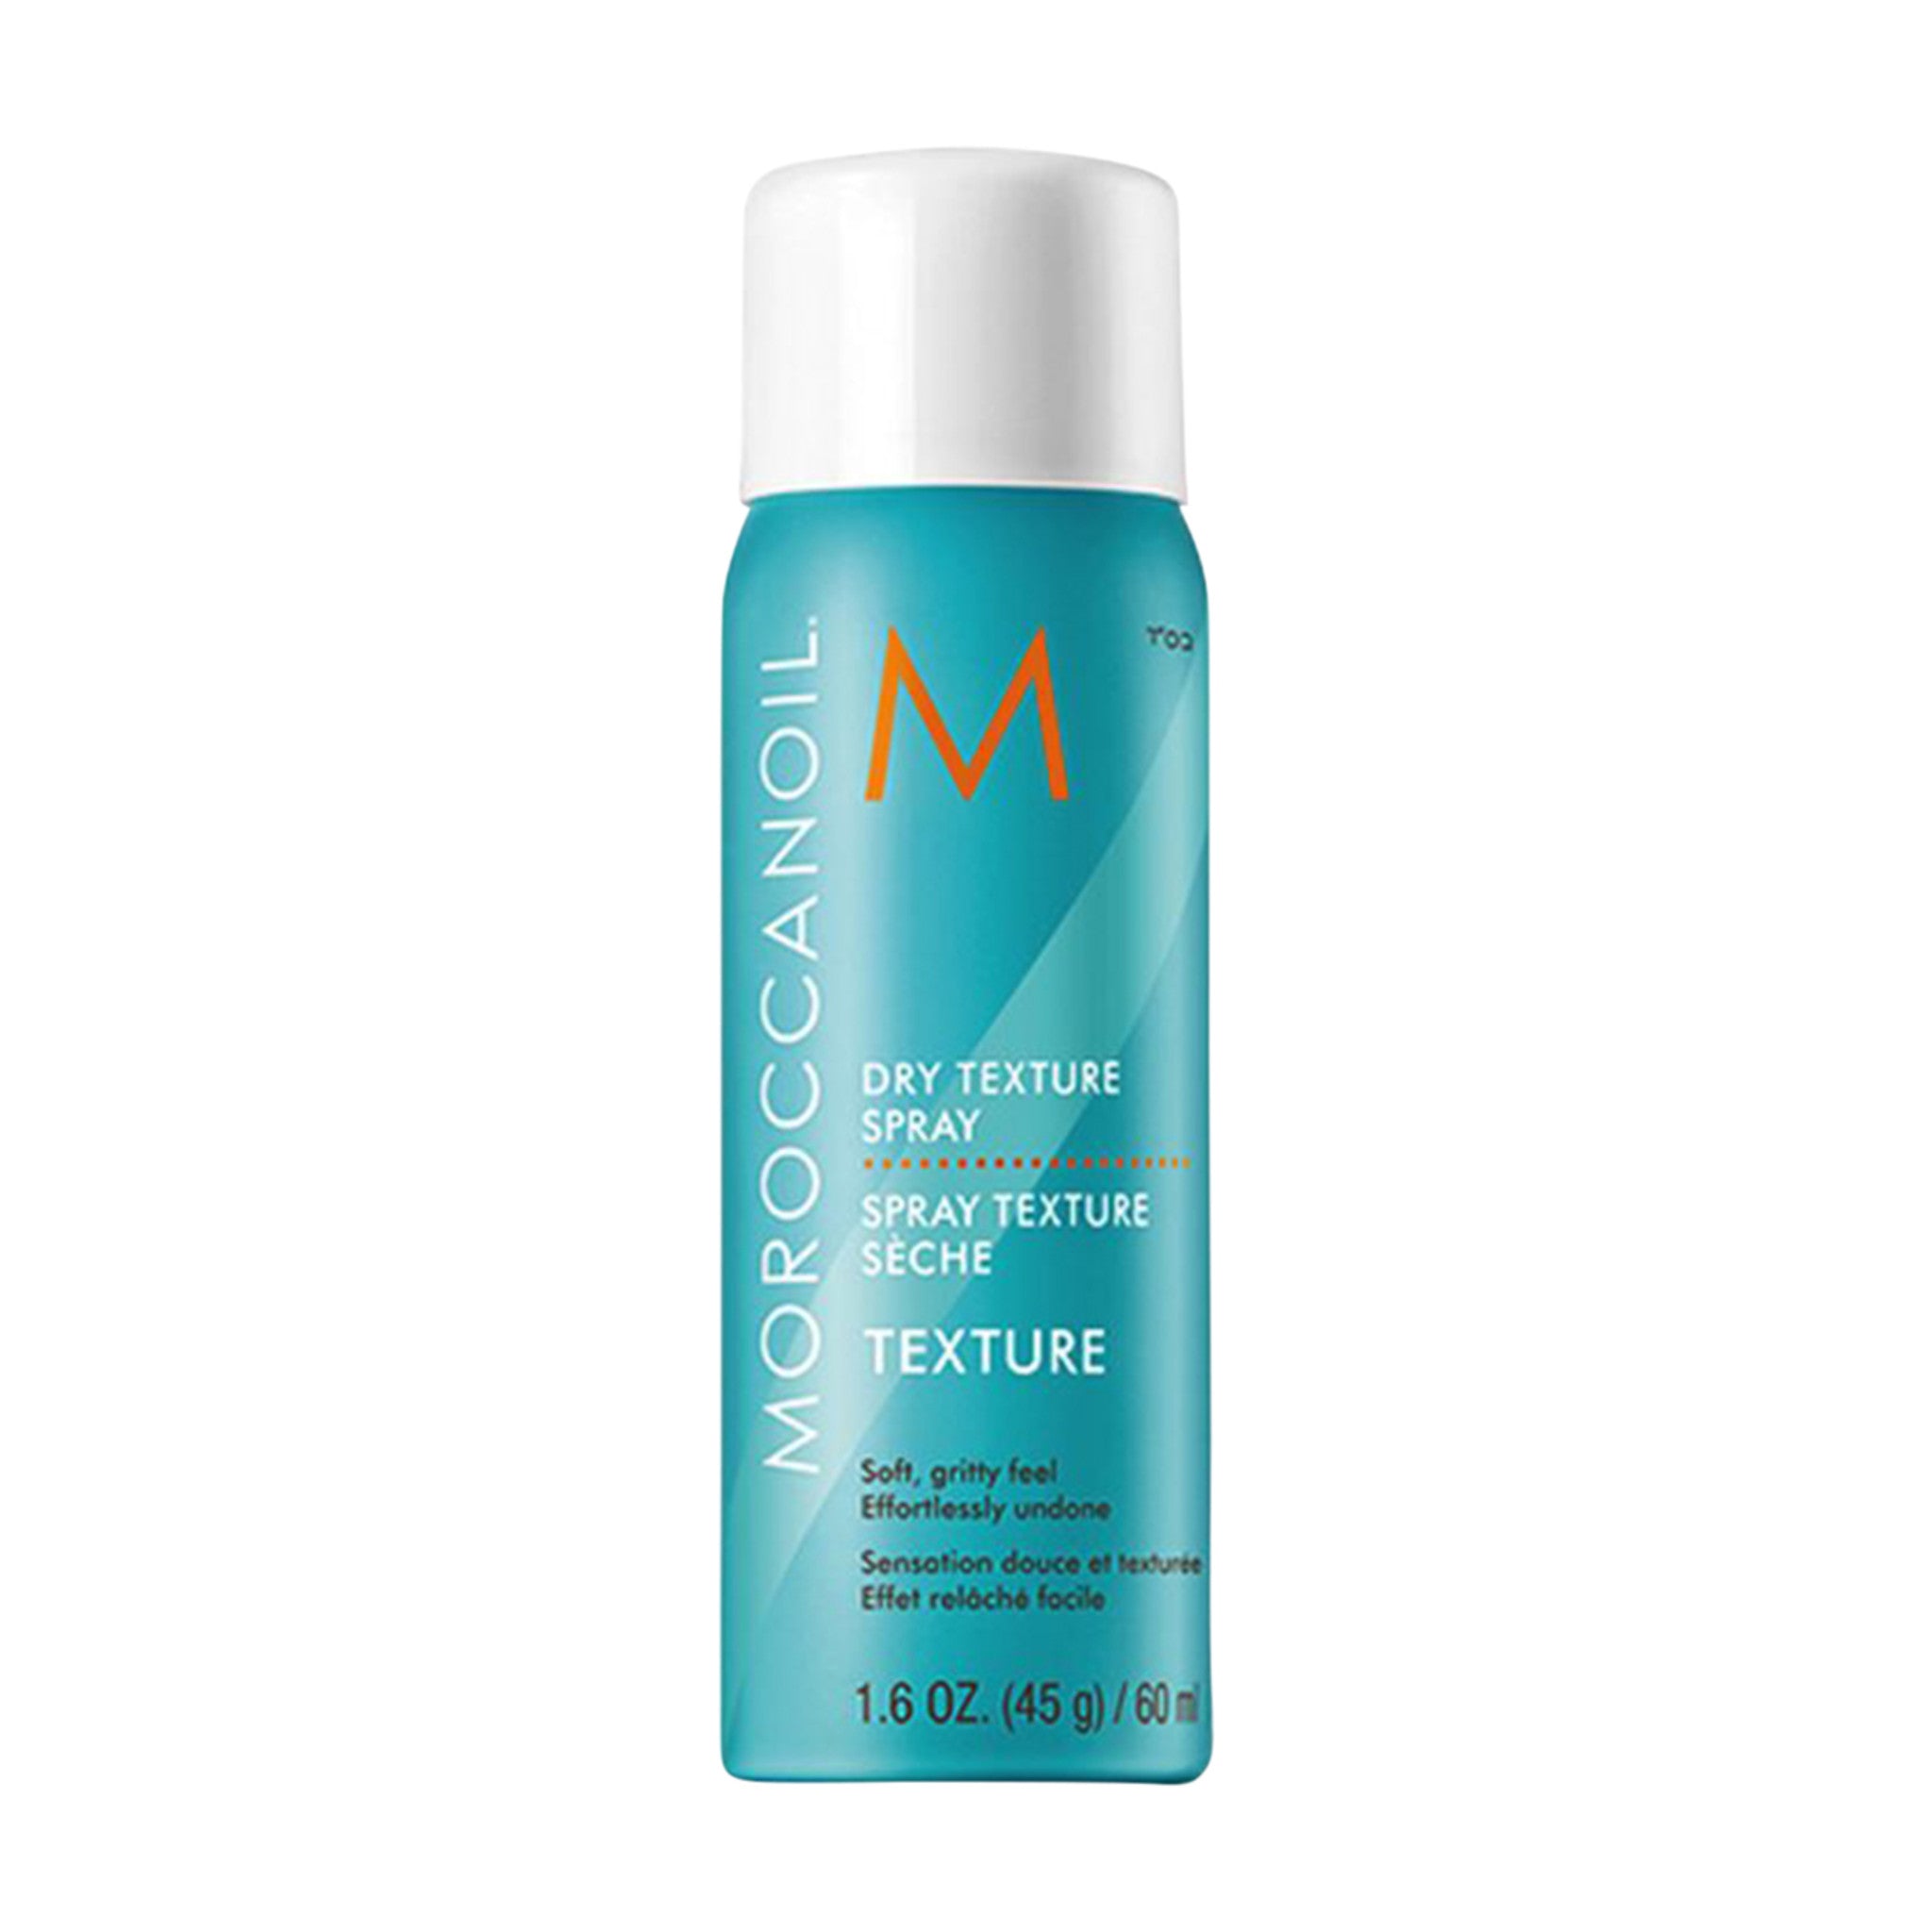 Moroccanoil Dry Texture Spray - 1.6 oz can